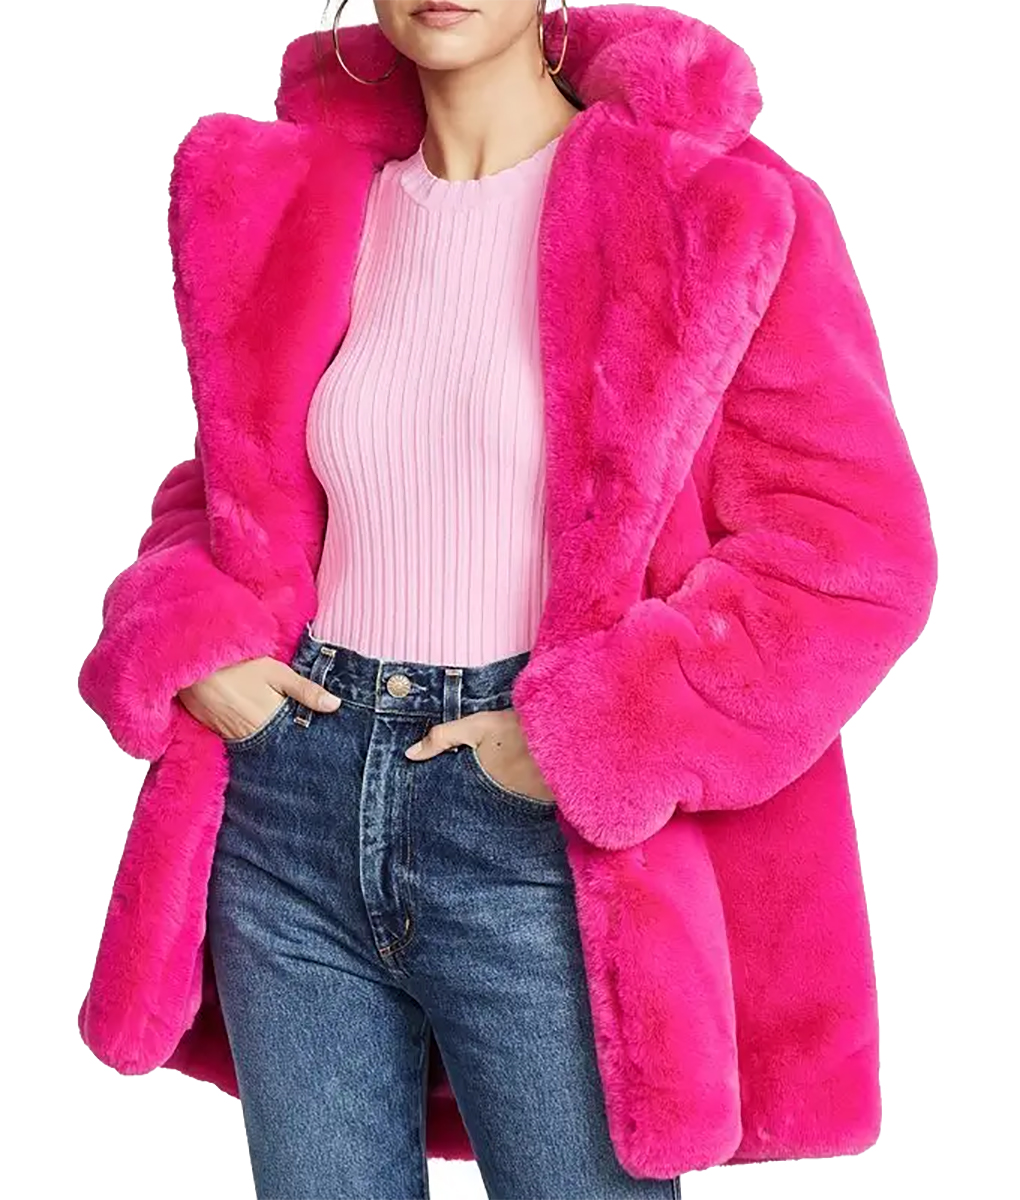 Taylor Swift Pink Fur Jacket